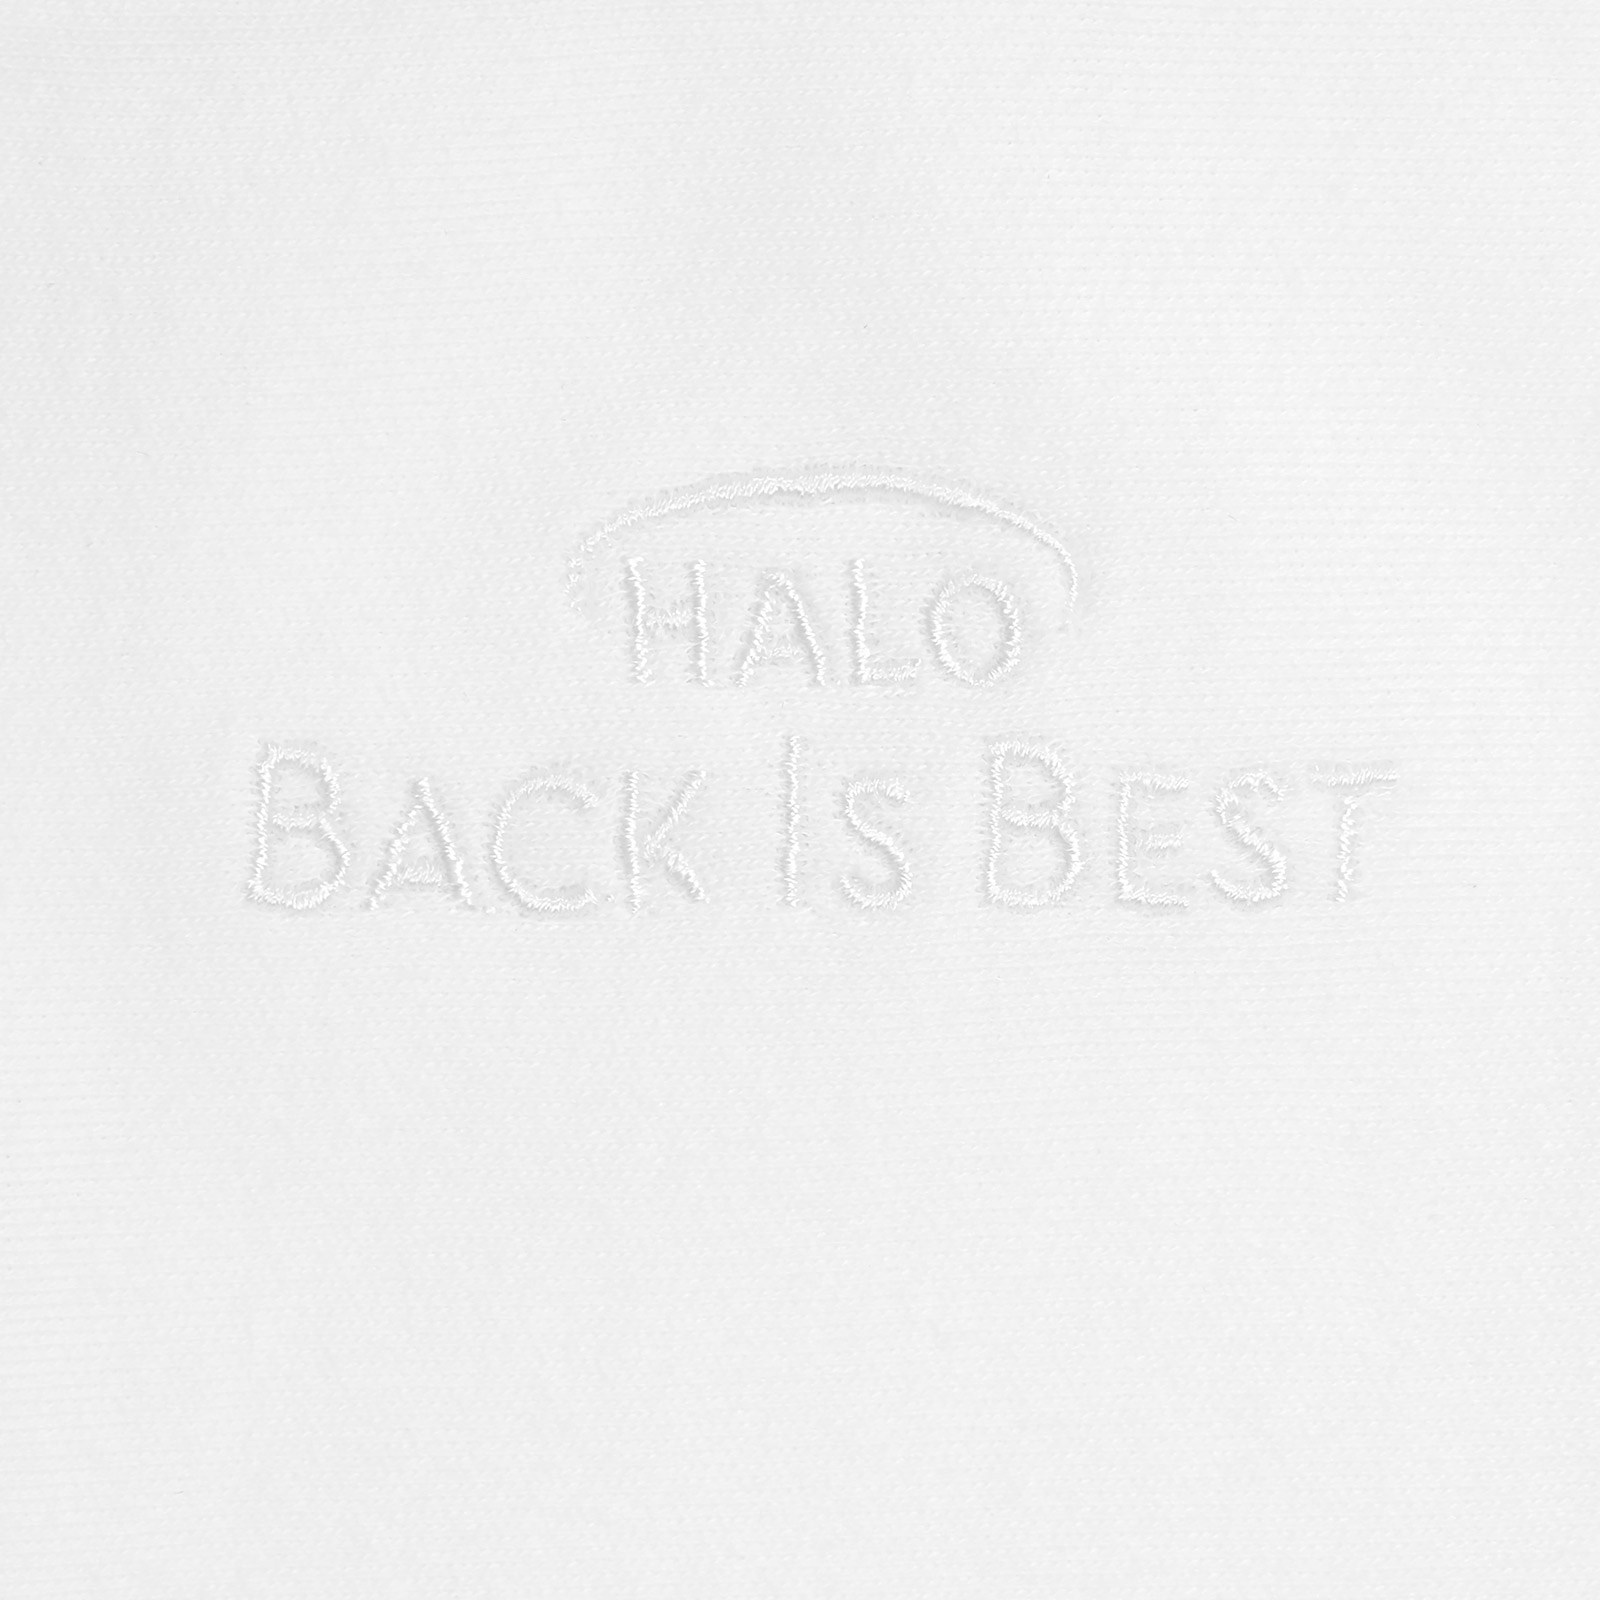 Couverture d'emmaillotage 3 en 1 SleepSack blanche TOG 1,5 (0-3 mois) (Halo) - Image 3